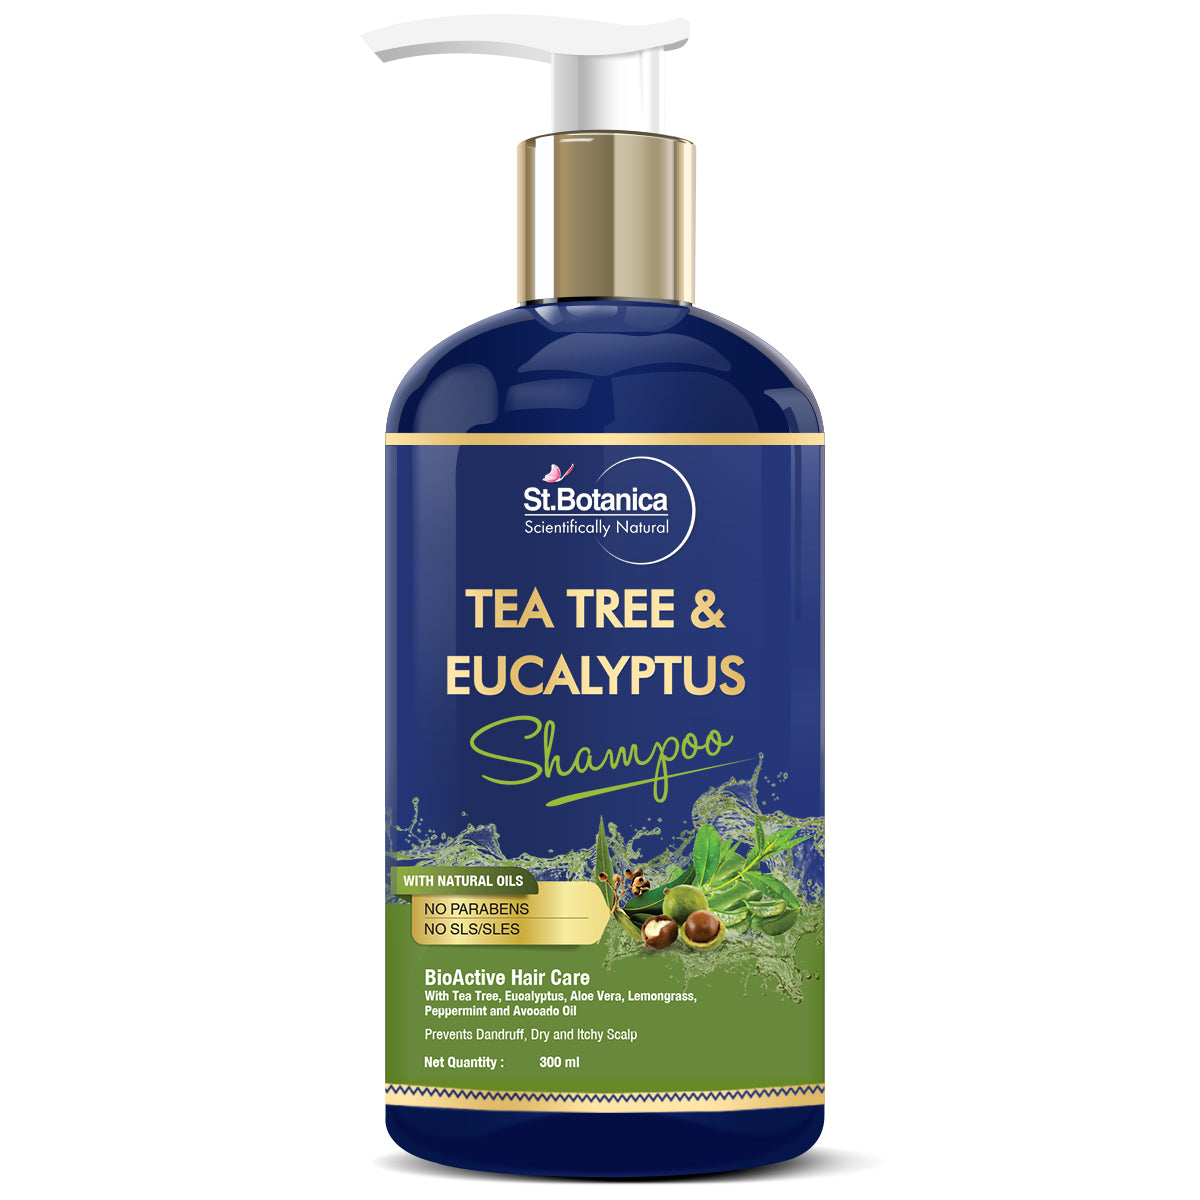 St.Botanica Eucalyptus & Tea Tree Oil Hair Repair Shampoo - 300ml - No SLS/Sulphate, No Parabens, No Silicon